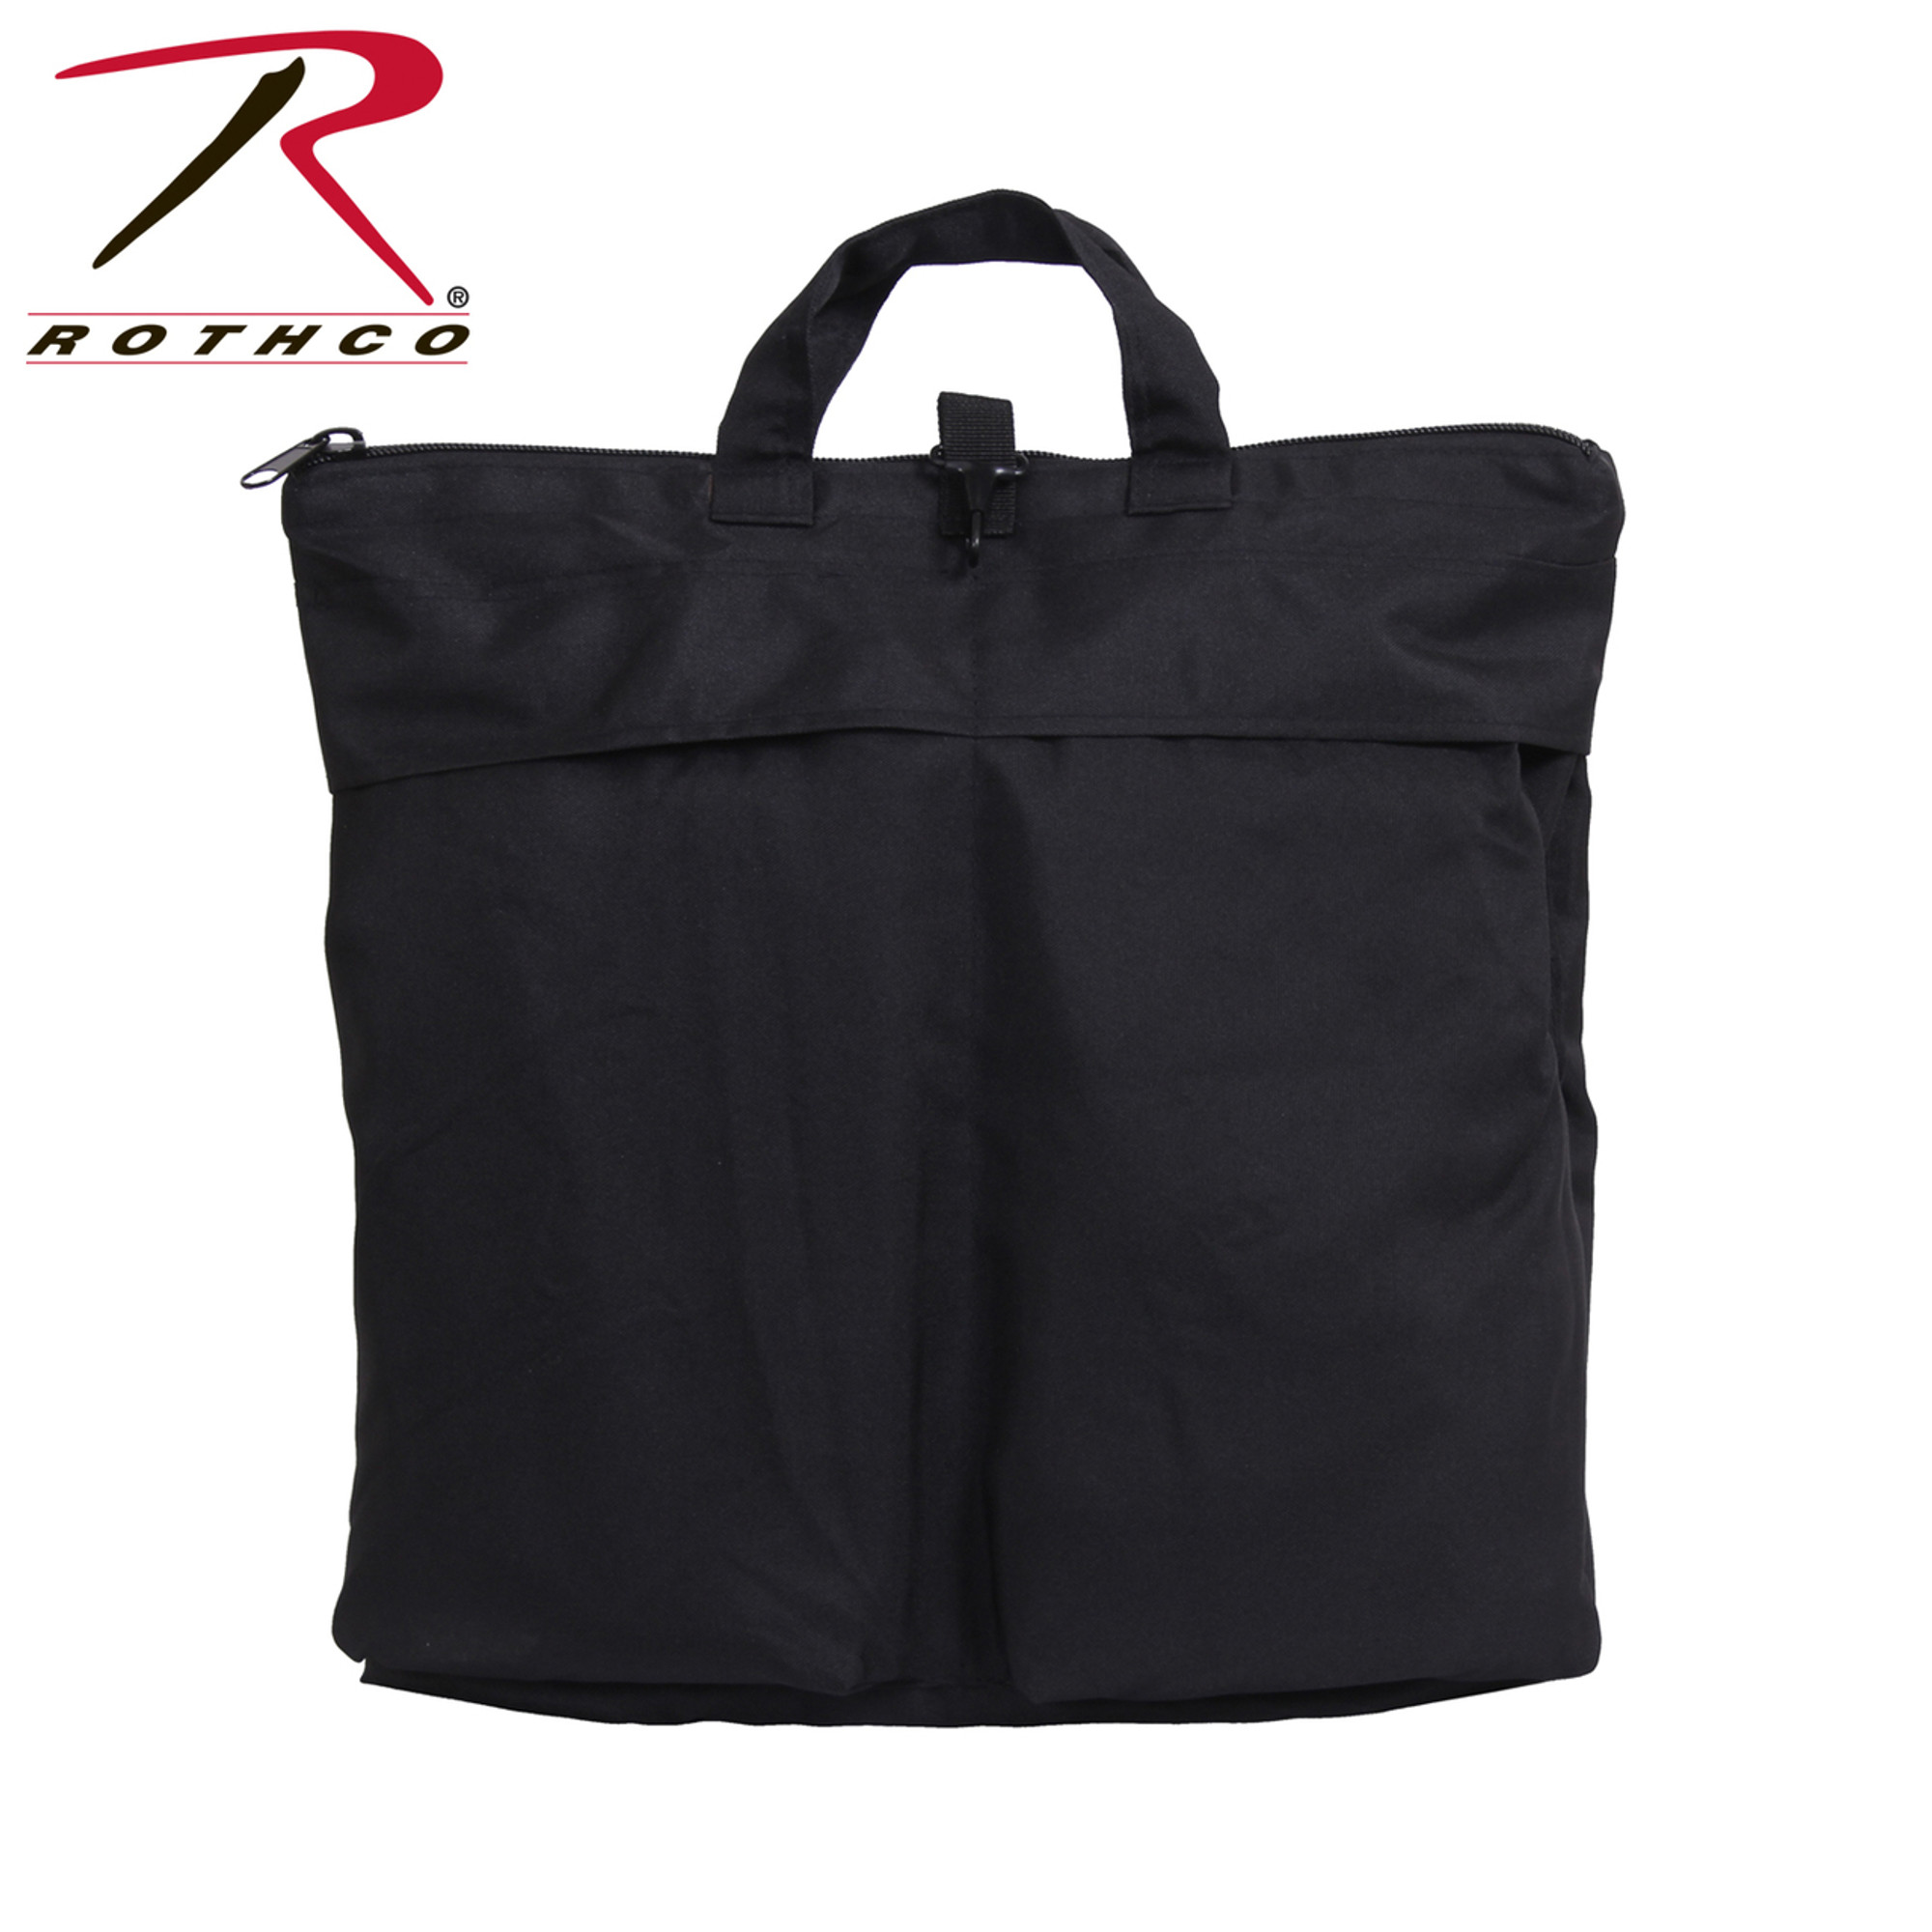 Rothco G.I. Type Flyers Helmet Bags - Black